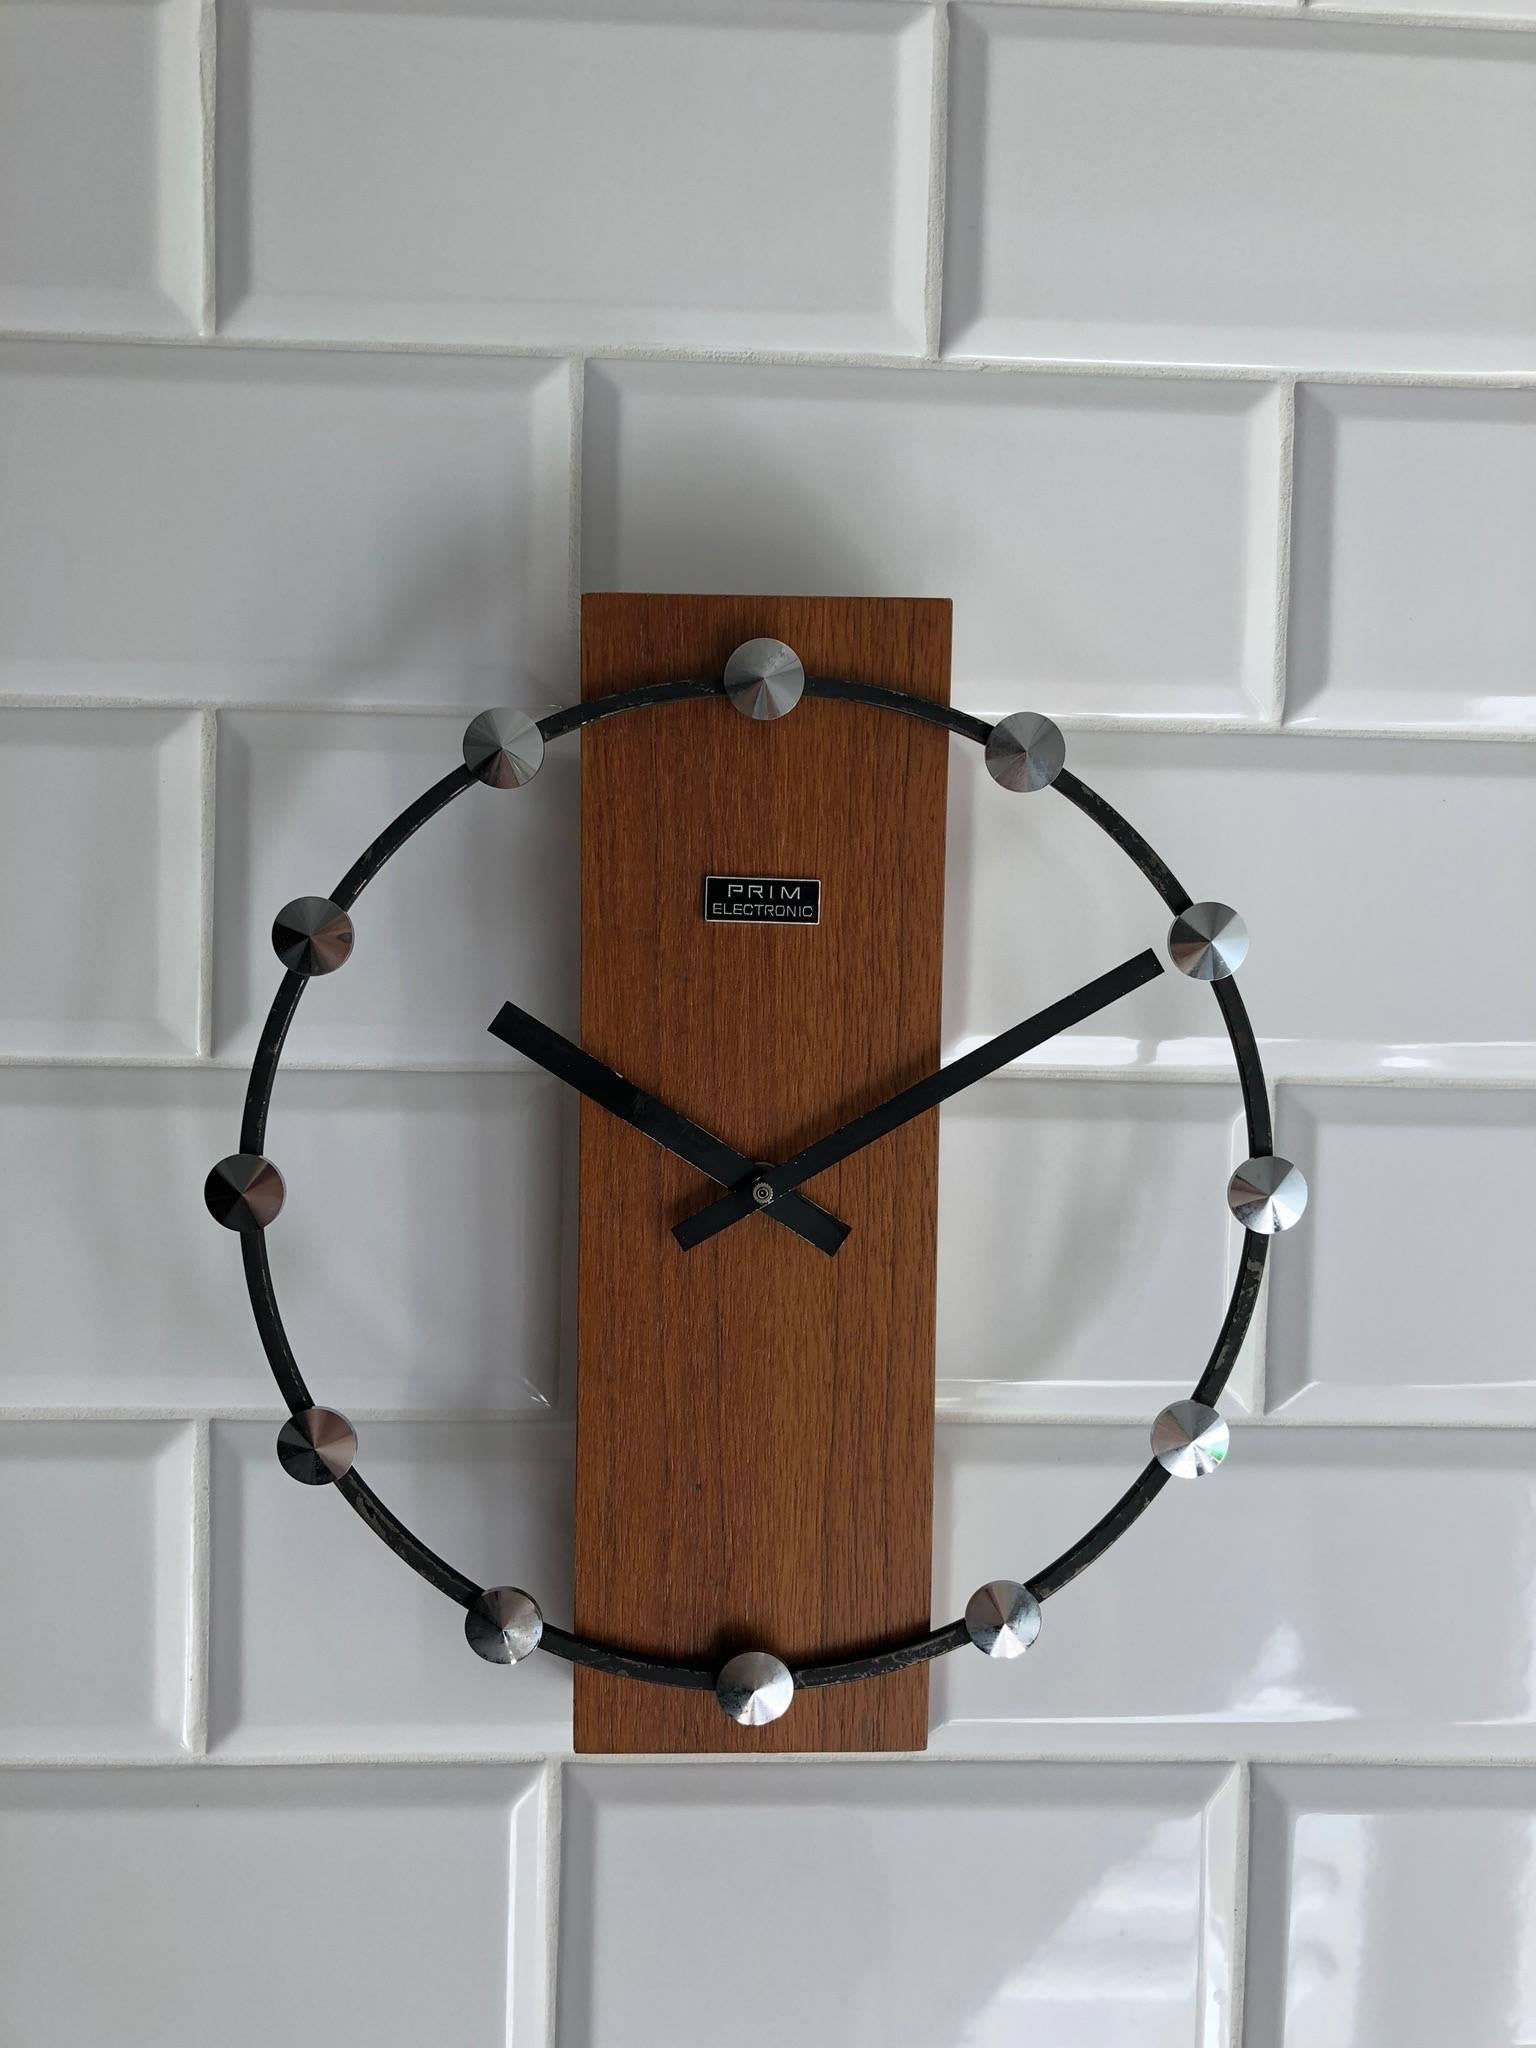 Midcentury Wall Clock by Prim 1